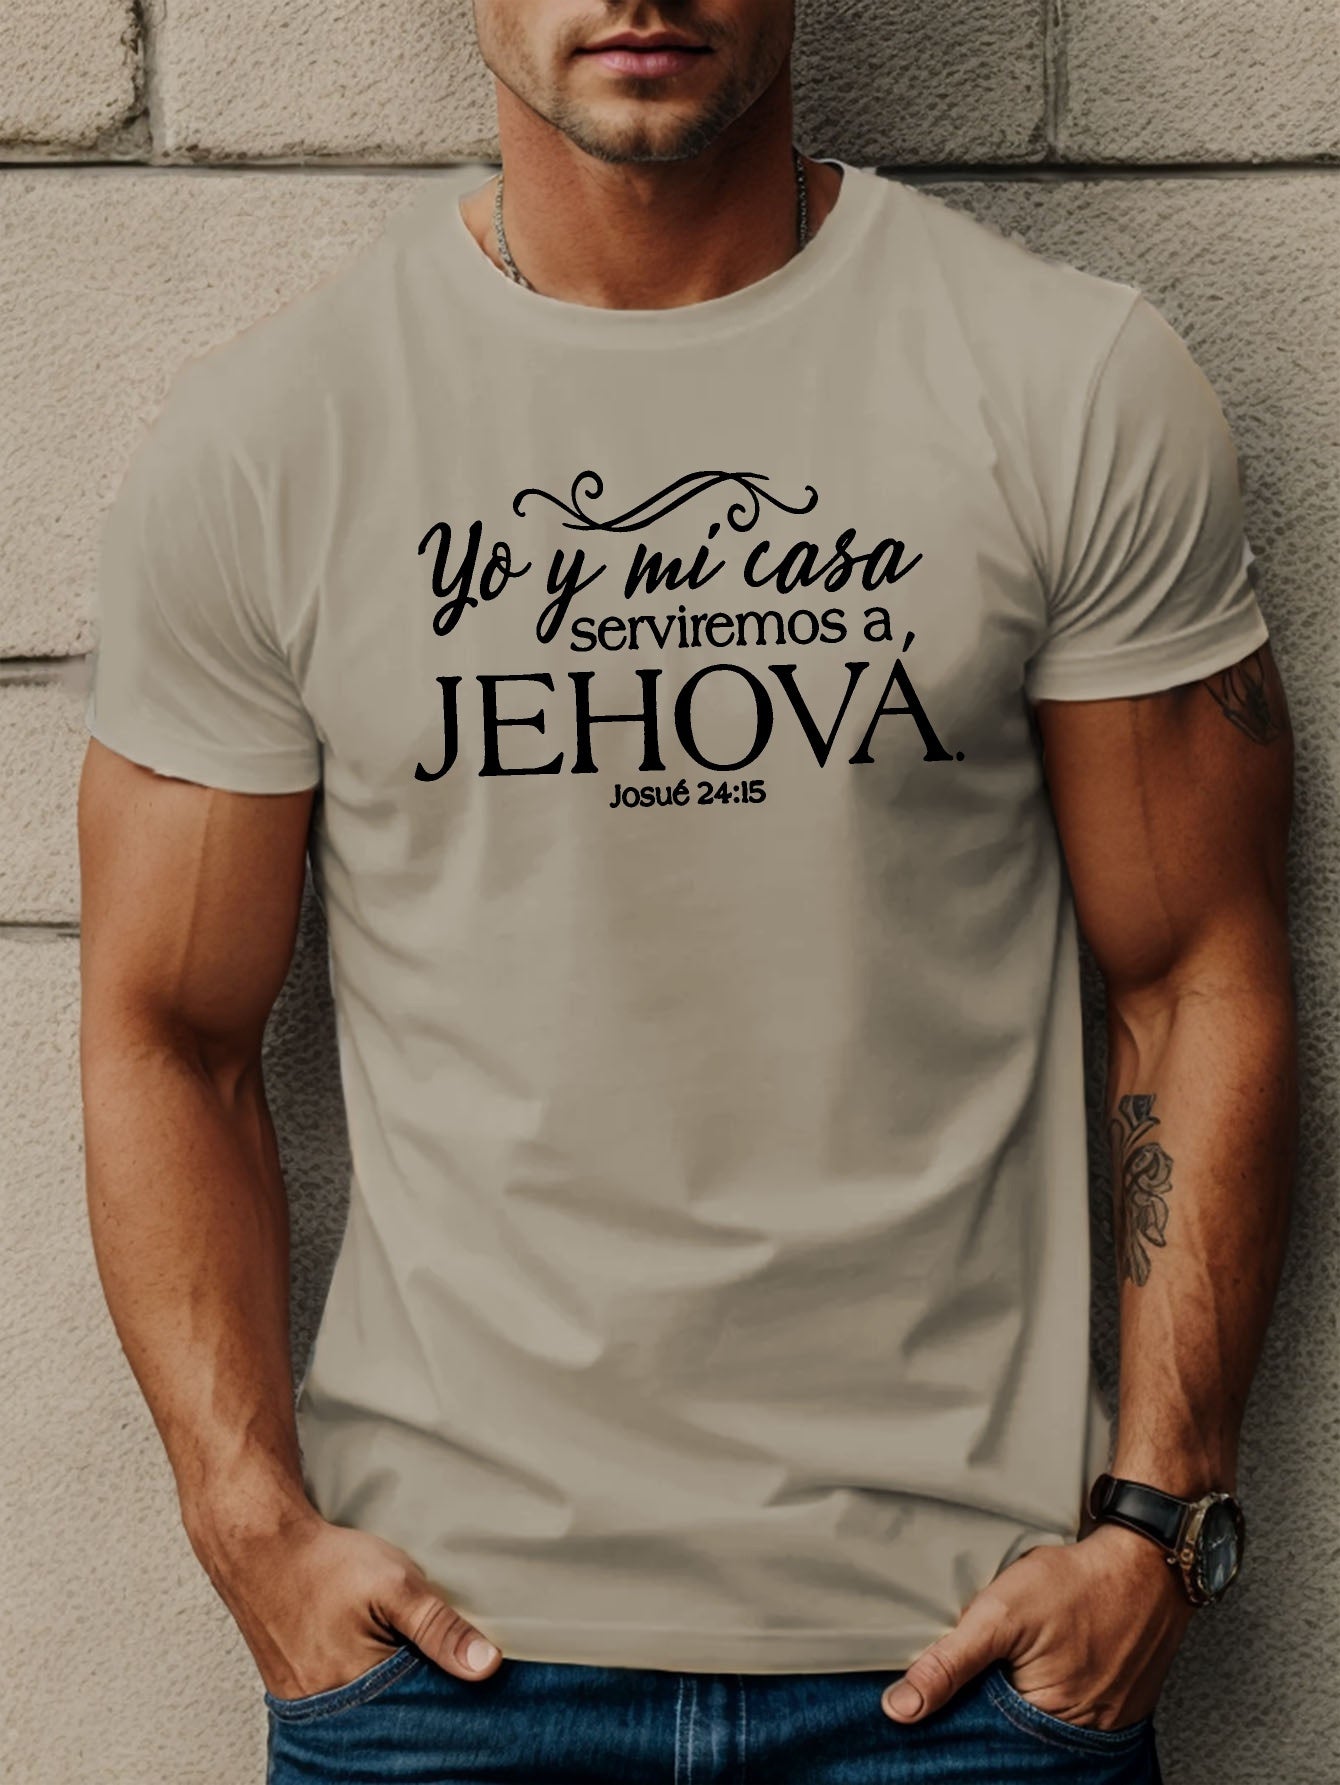 YO Y MI CASA SERVIREMOS A JEHOVA Christian Spanish Men's T-shirt claimedbygoddesigns